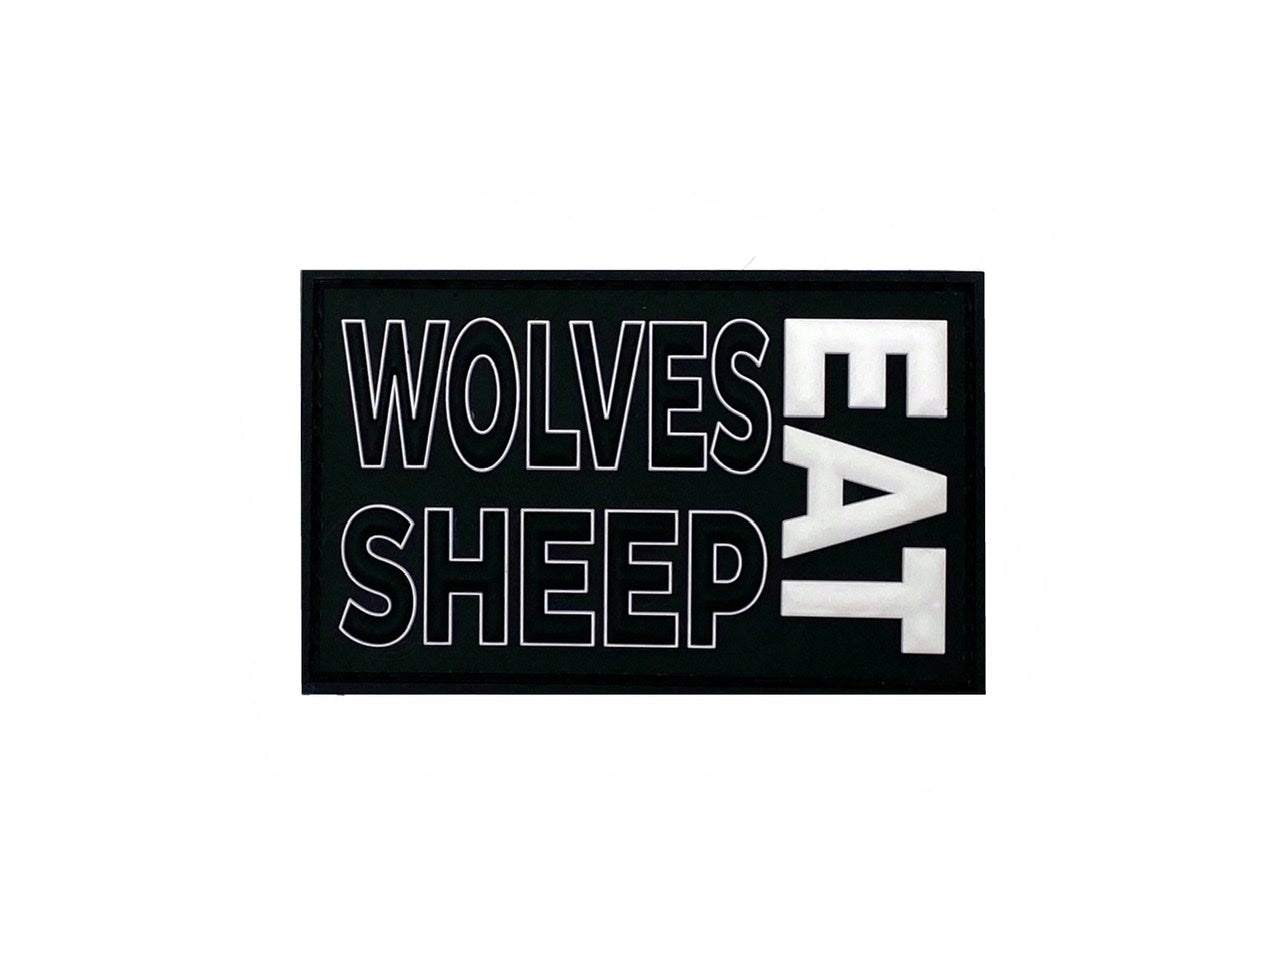 Wolves Eat Sheep